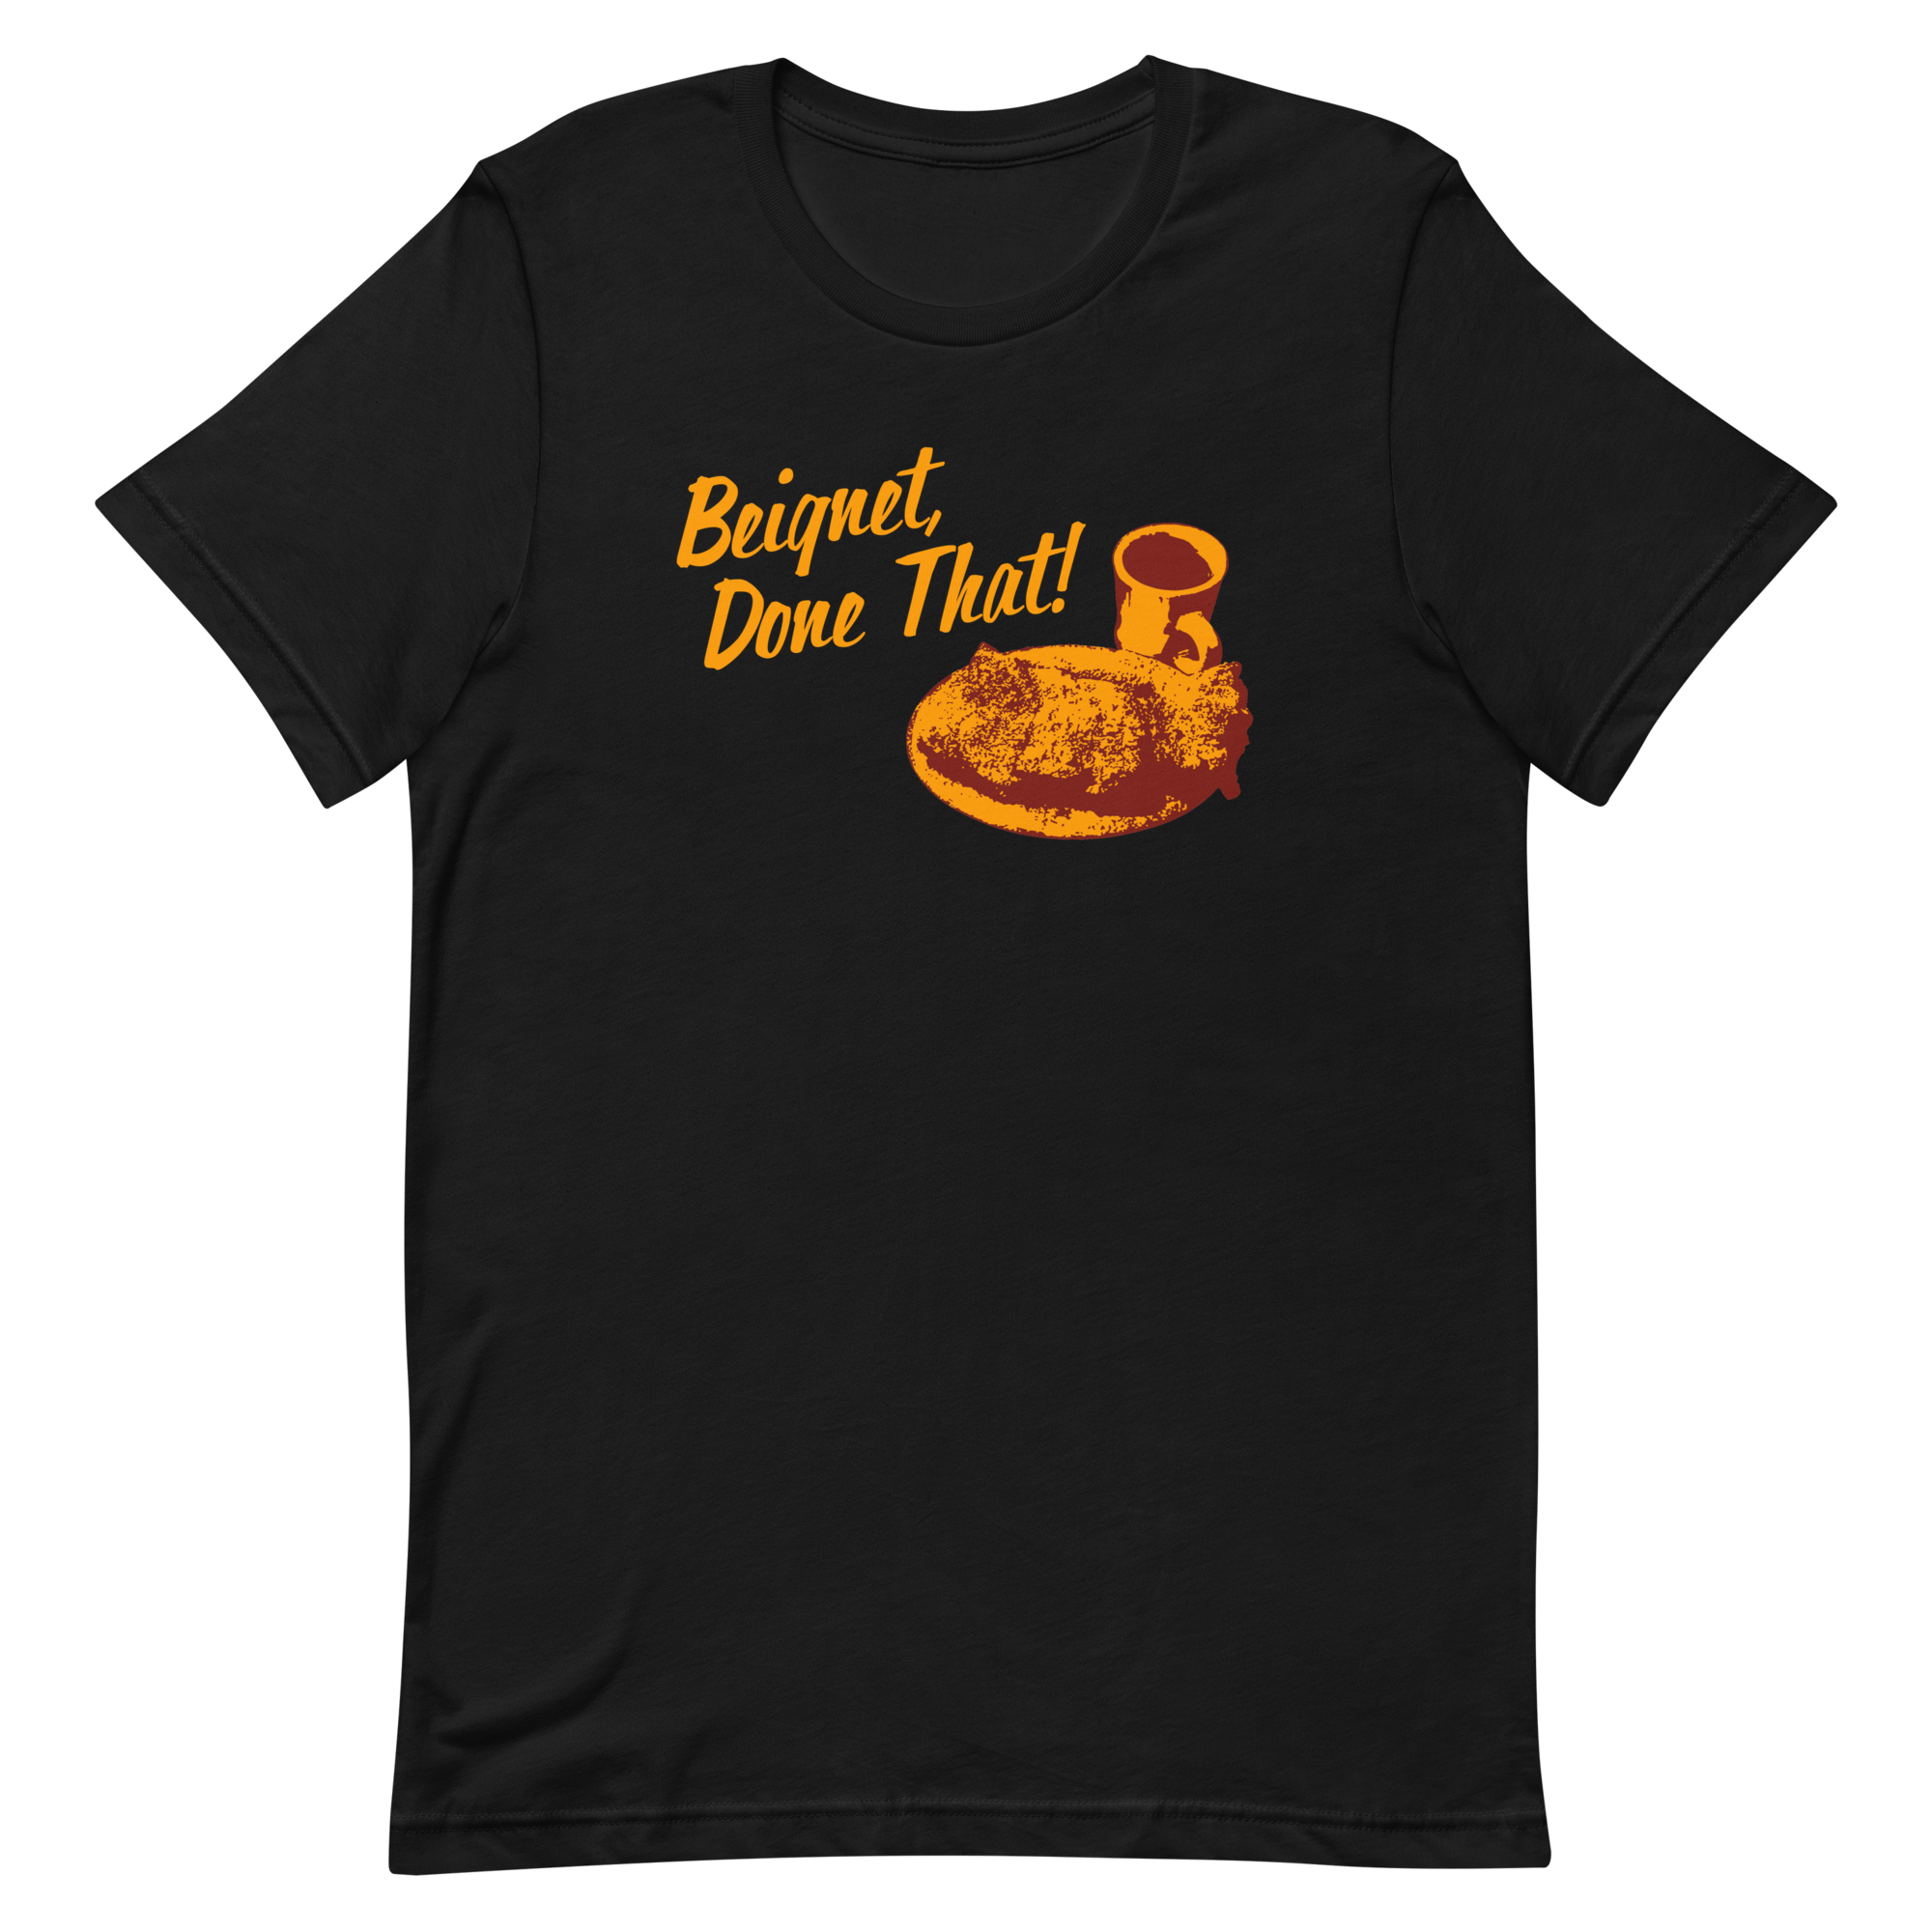 Conan O'Brien Needs A Friend: Beignet, Done That- T-shirt (Black)